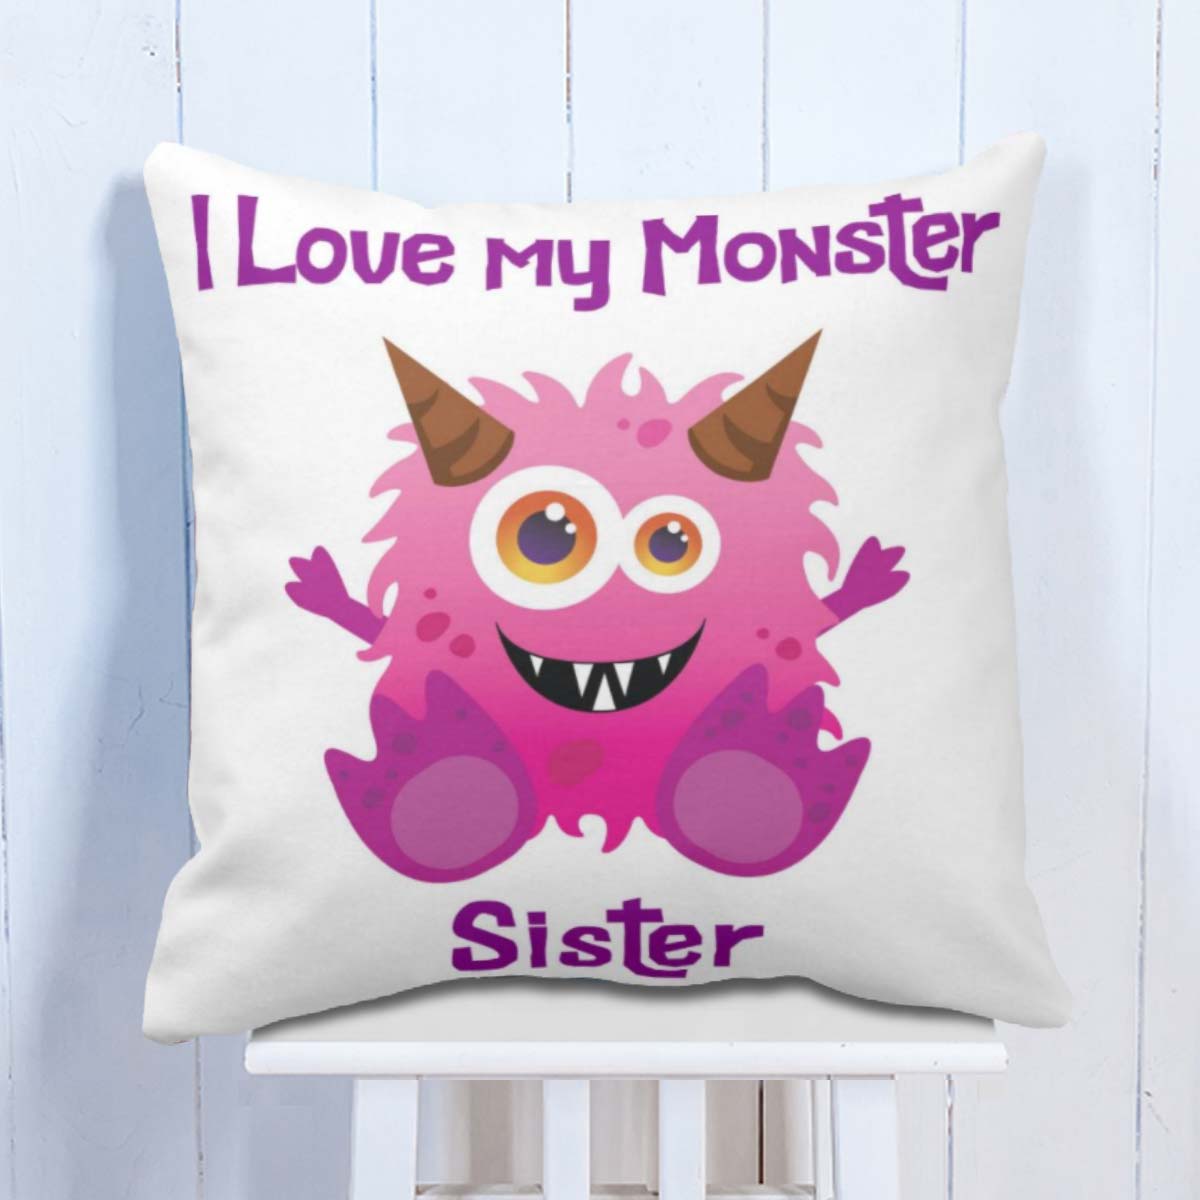 I Love my Monster Sister Cushion